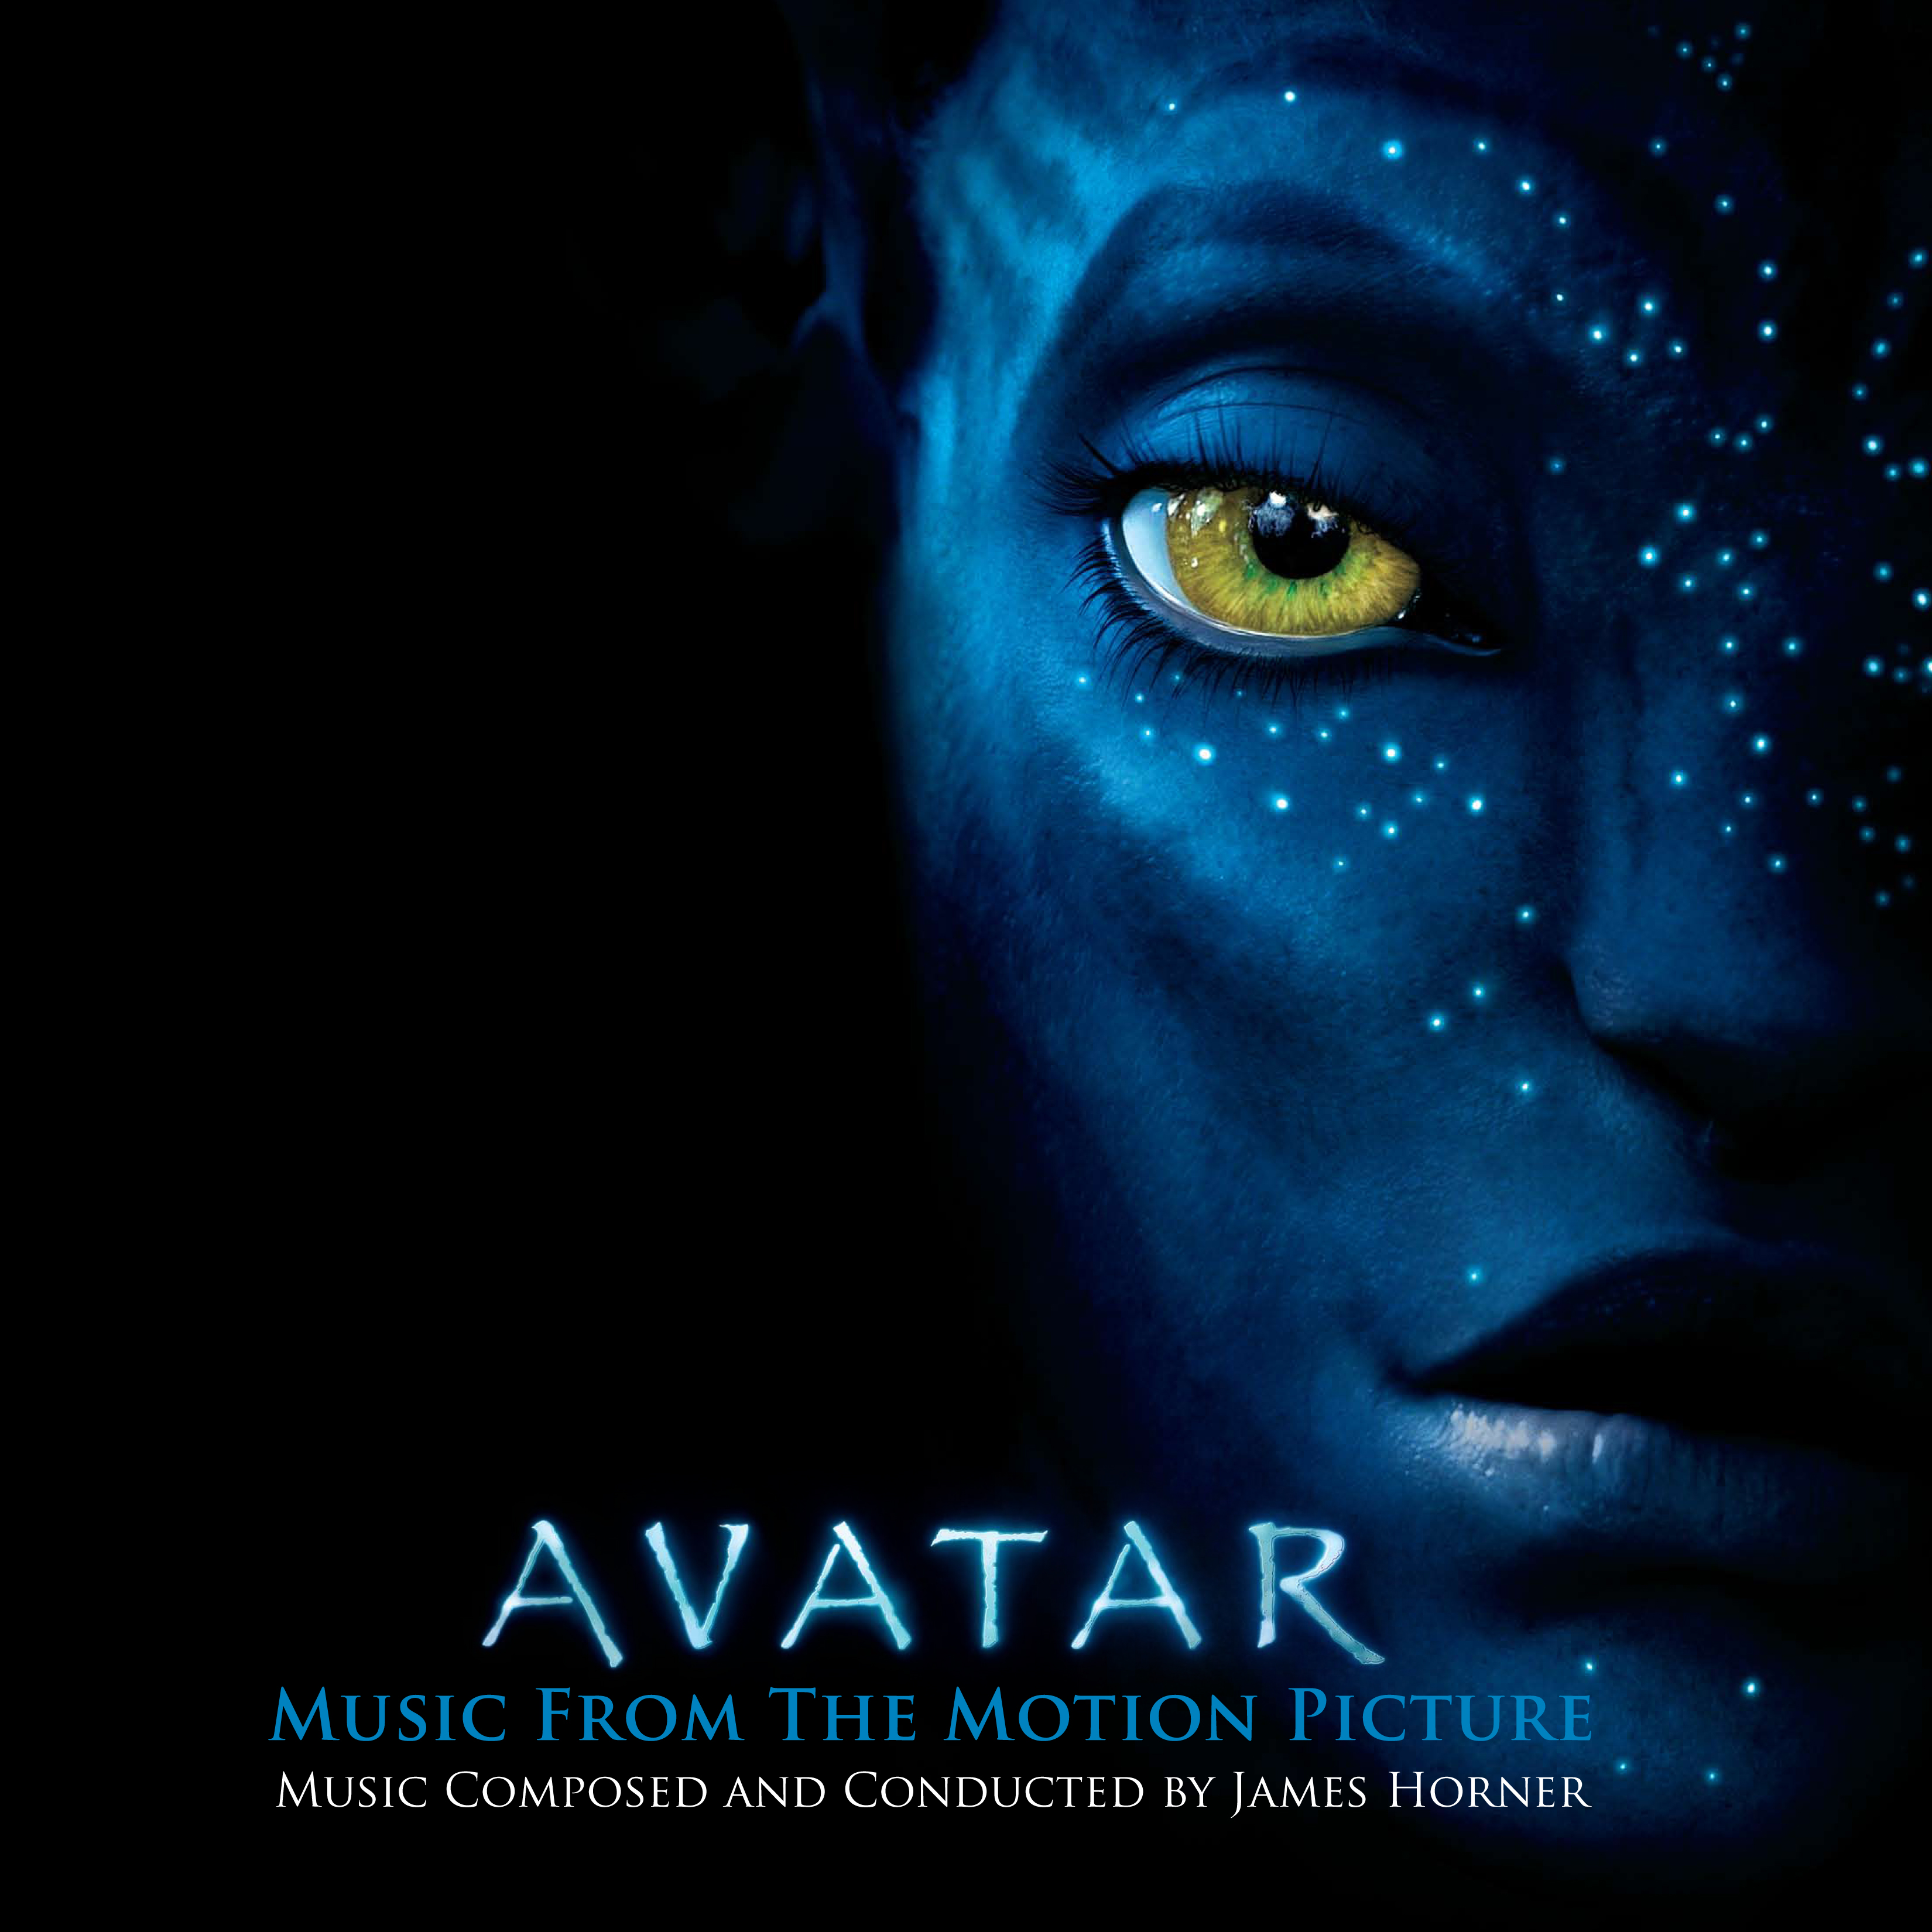 سجل حضورك باسم فيلم Avatar_Soundtrack